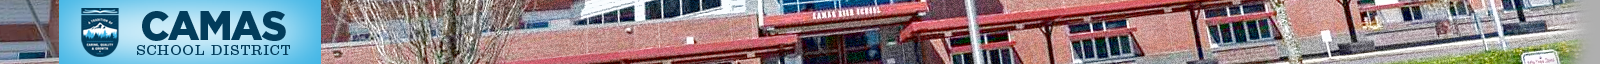 Camas School District, WA logo